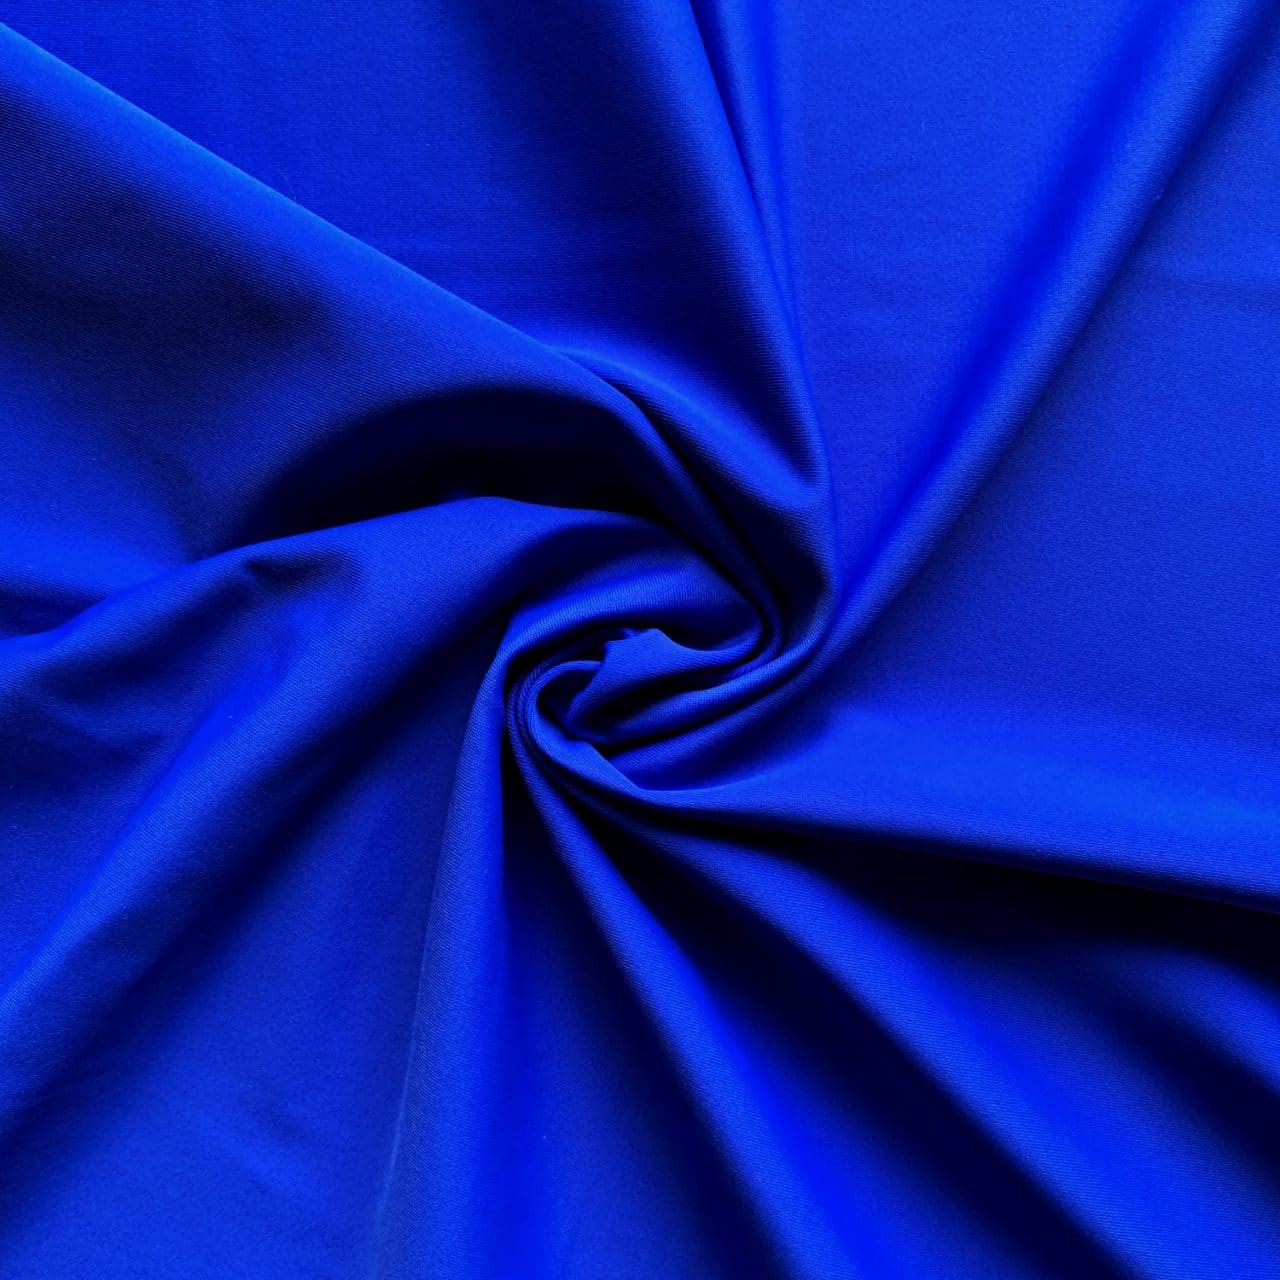 https://www.solidstonefabrics.com/wp-content/uploads/2018/07/Carvico-VITA-Econyl-Recycled-Nylon-Swimwear-Fabric-Baltimora-Royal-Blue-Italian-Luxury-Recycled-Swimwear-Fabric.jpg